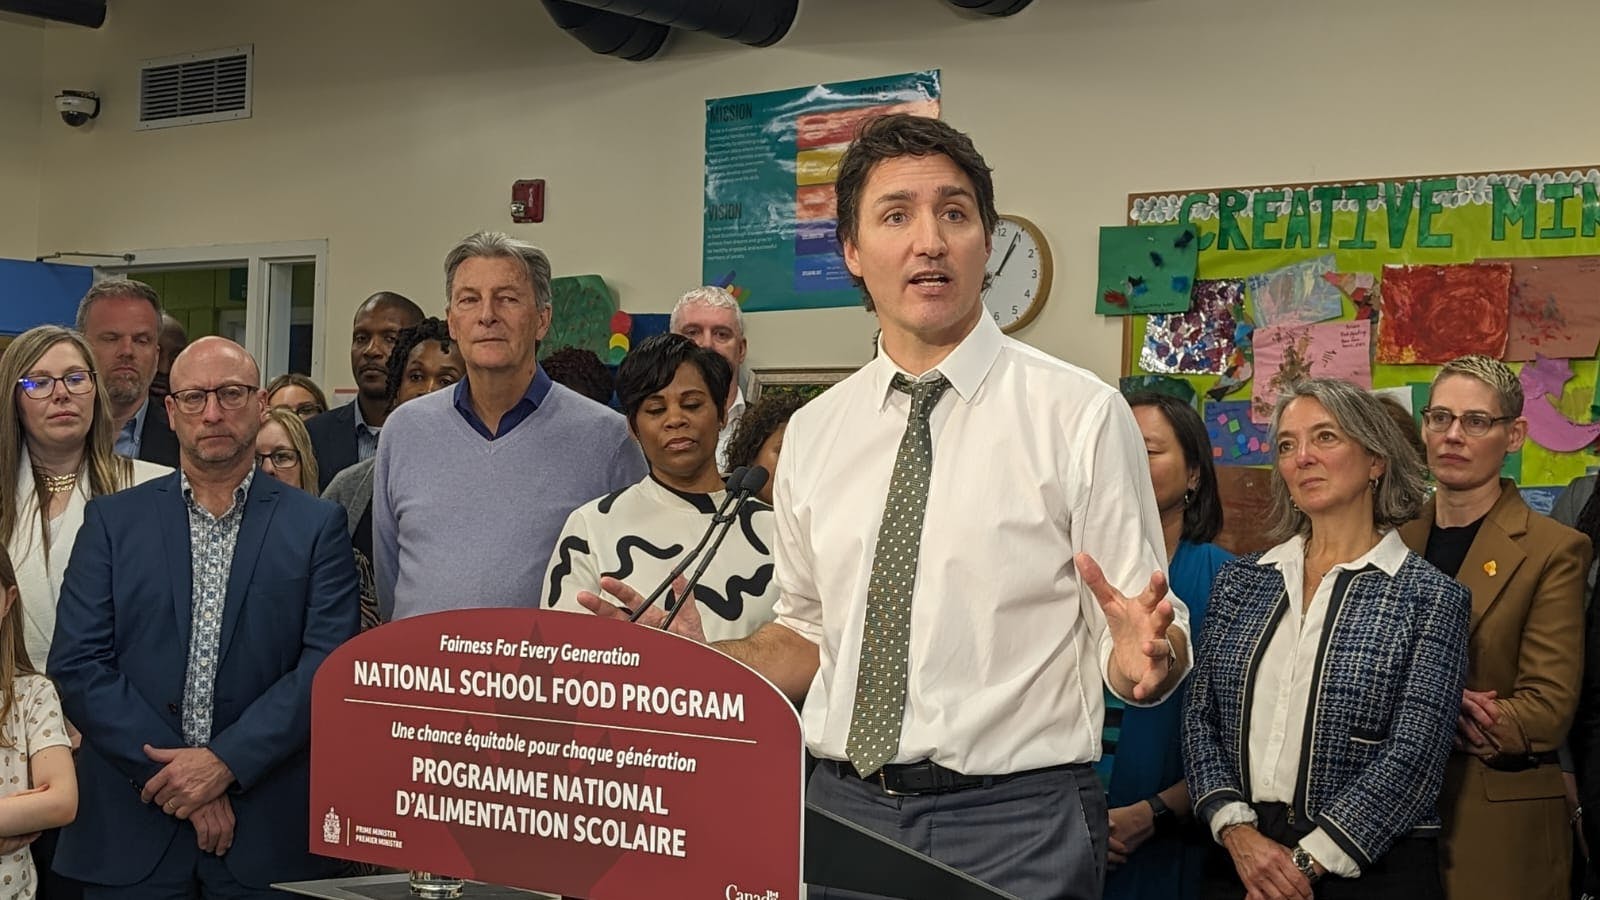 Trudeau announces $1 billion national school food program